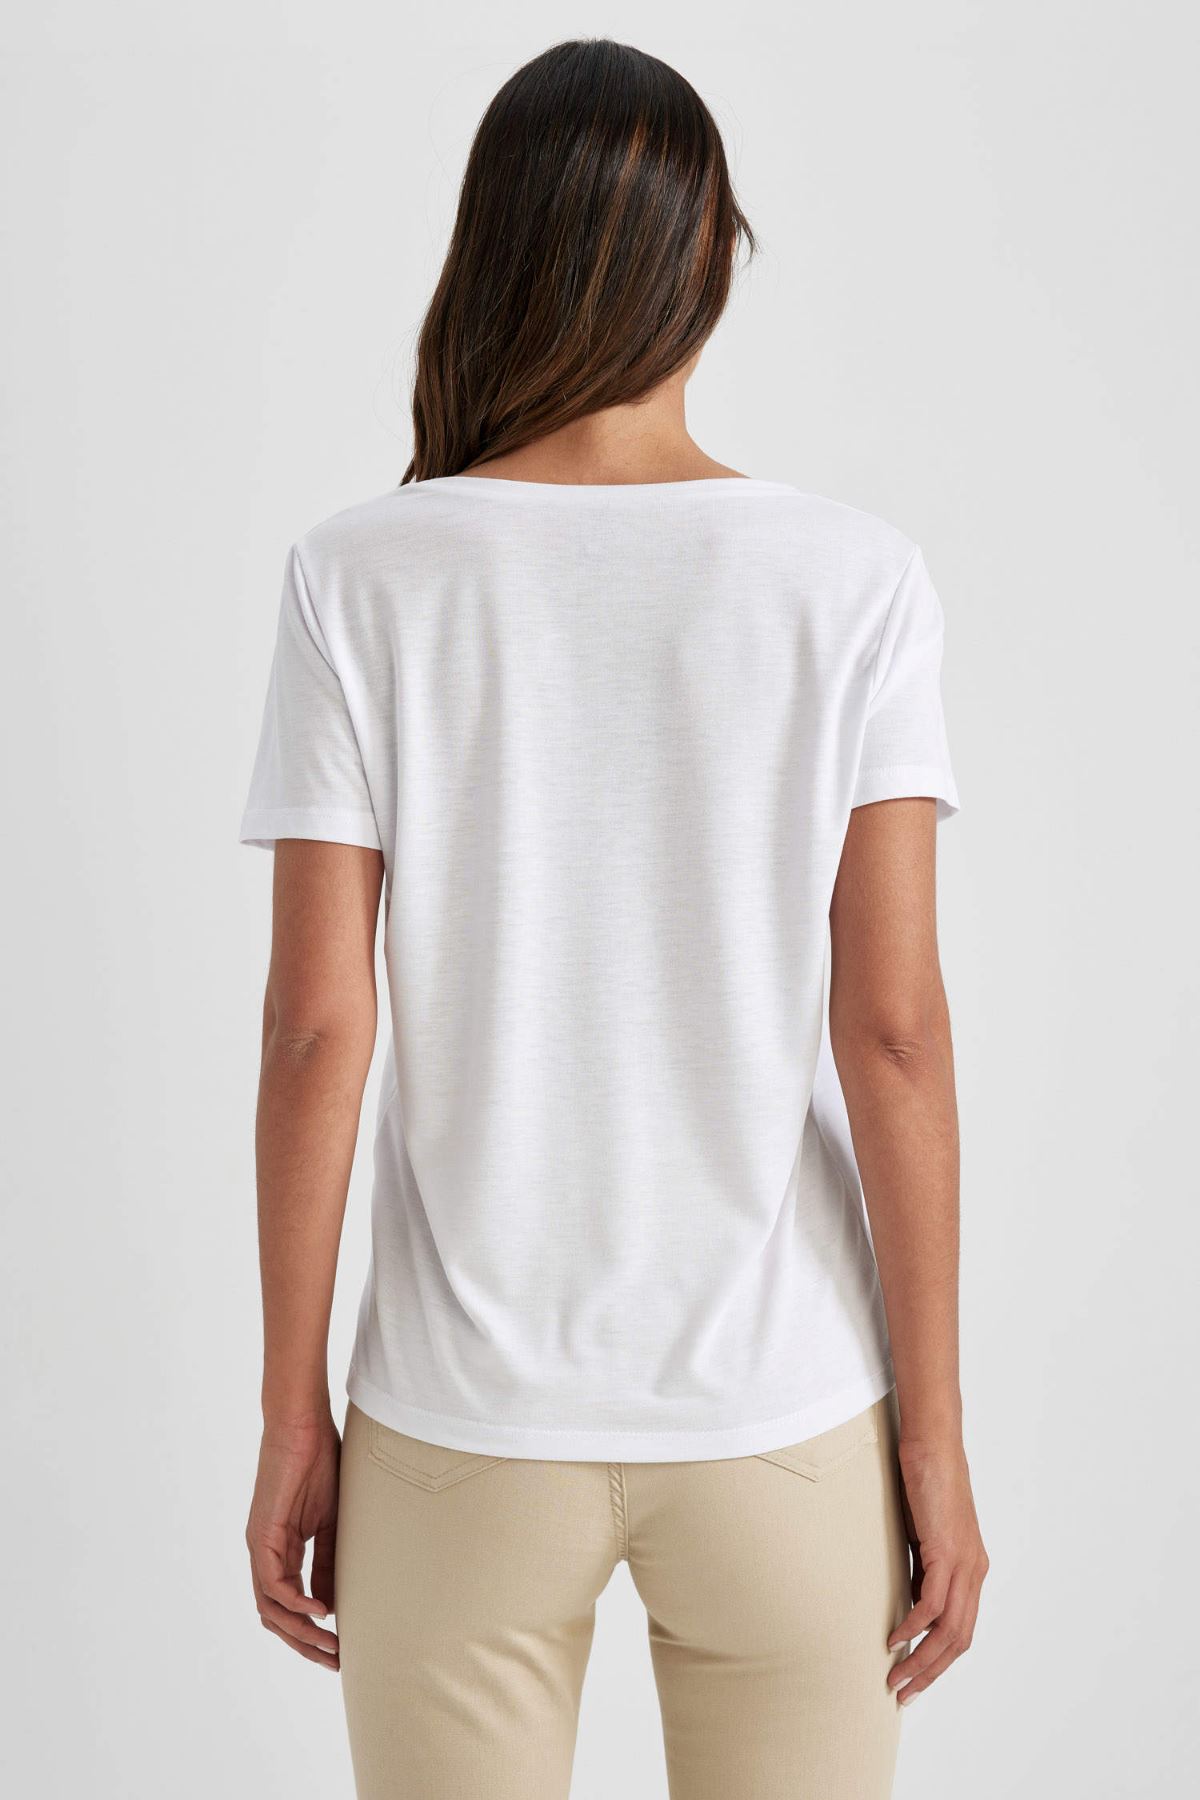 Defacto Kadın Beyaz Tişört - W9204AZ/WT34